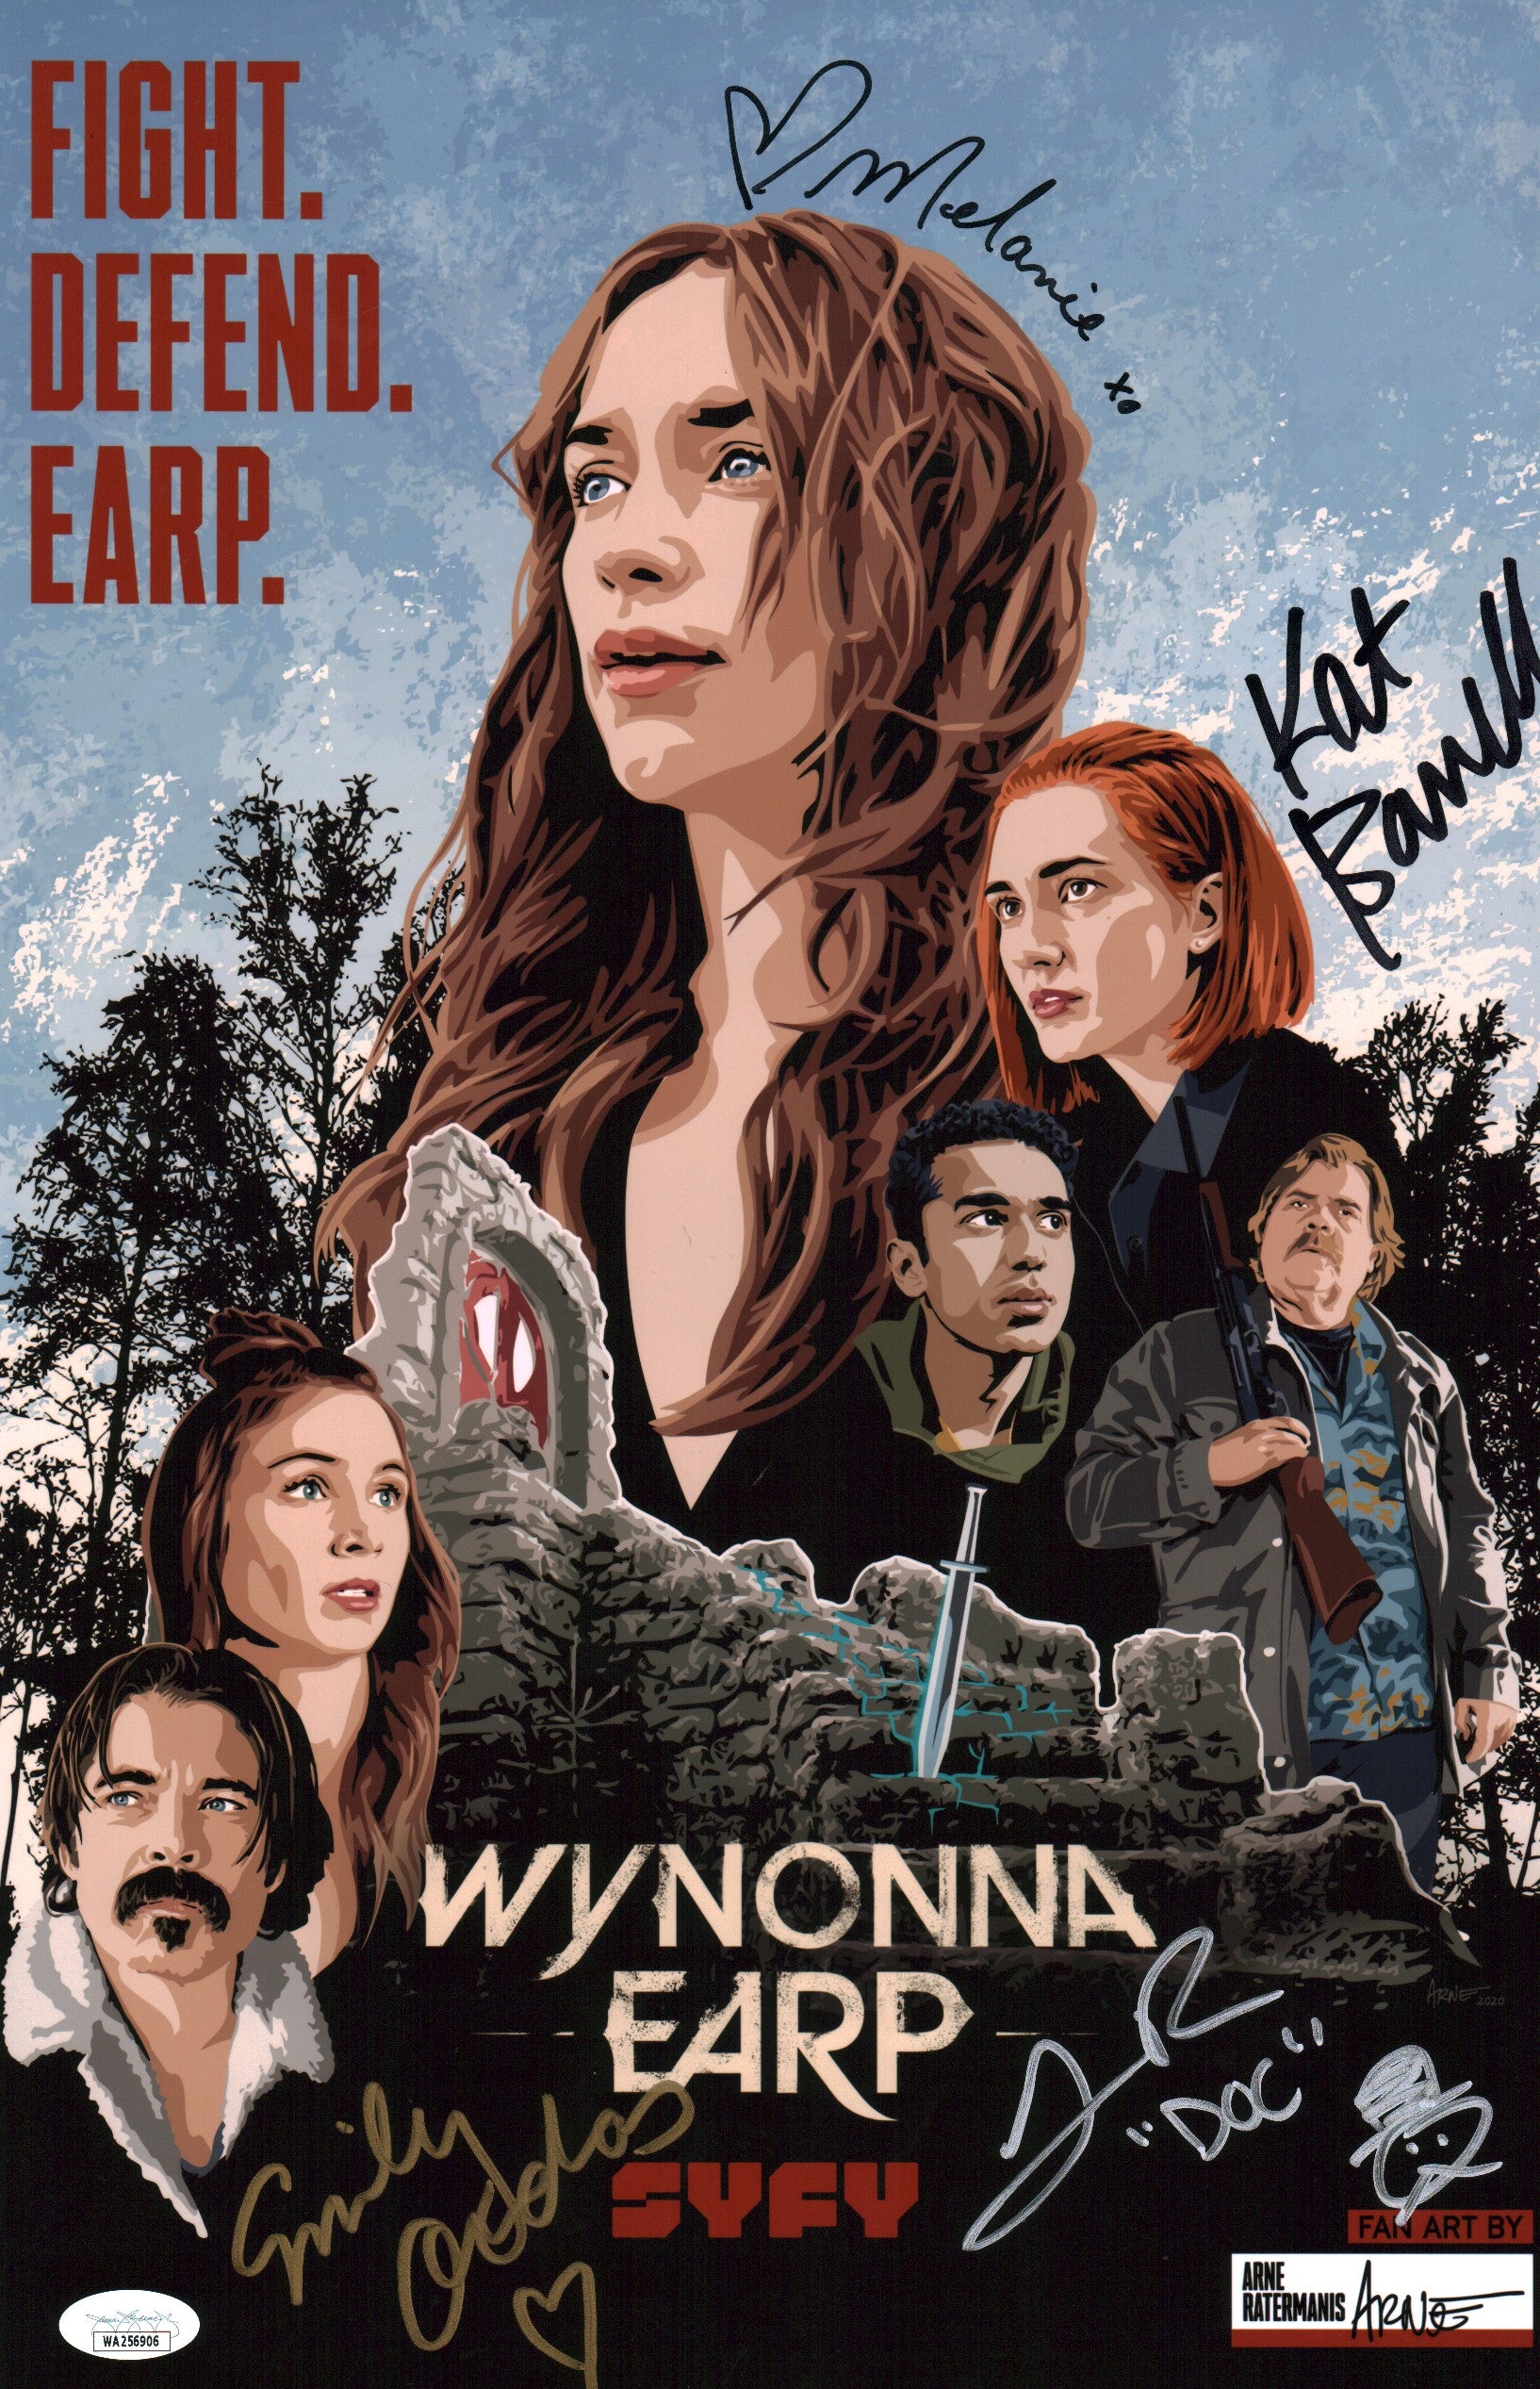 Wynonna Earp 11x17 Cast Photo Poster Signed Andras Barrell JSA Autograph